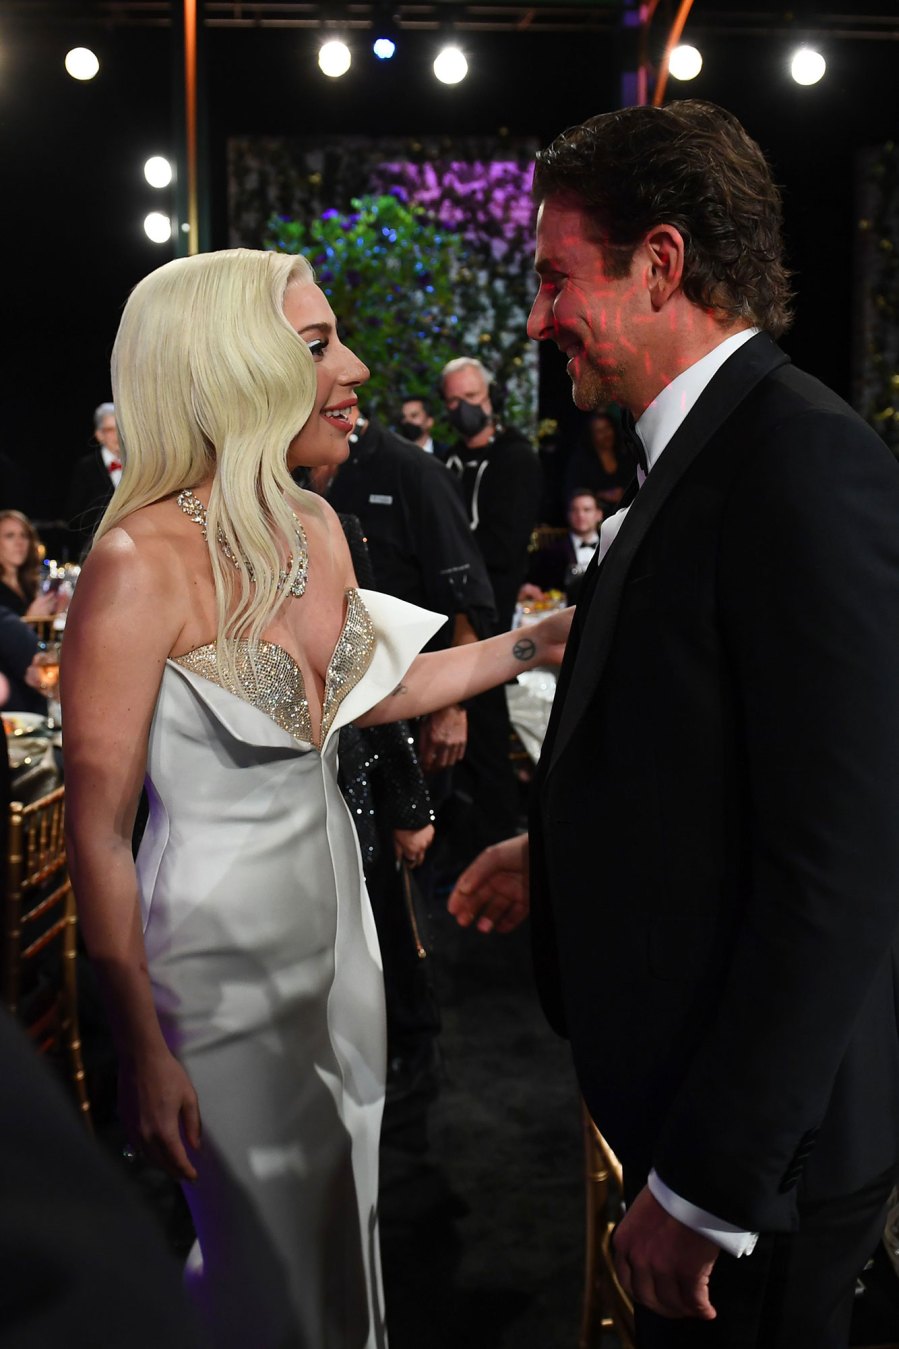 A Star Is Born Costars Lady Gaga and Bradley Cooper Share a Big Hug at the 2022 SAG Awards